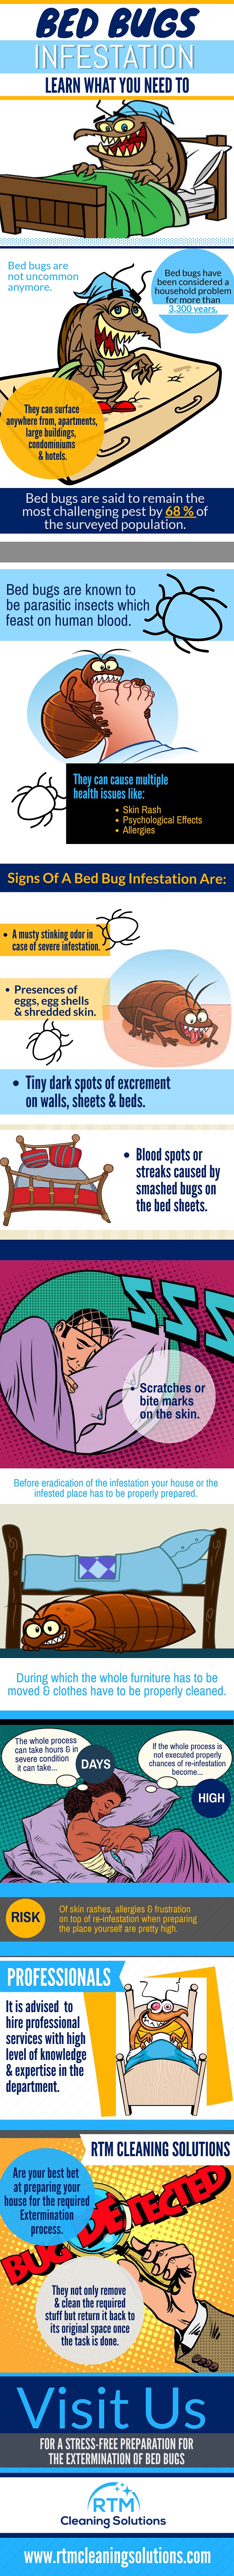 Infographic on Bed Bug Infestation